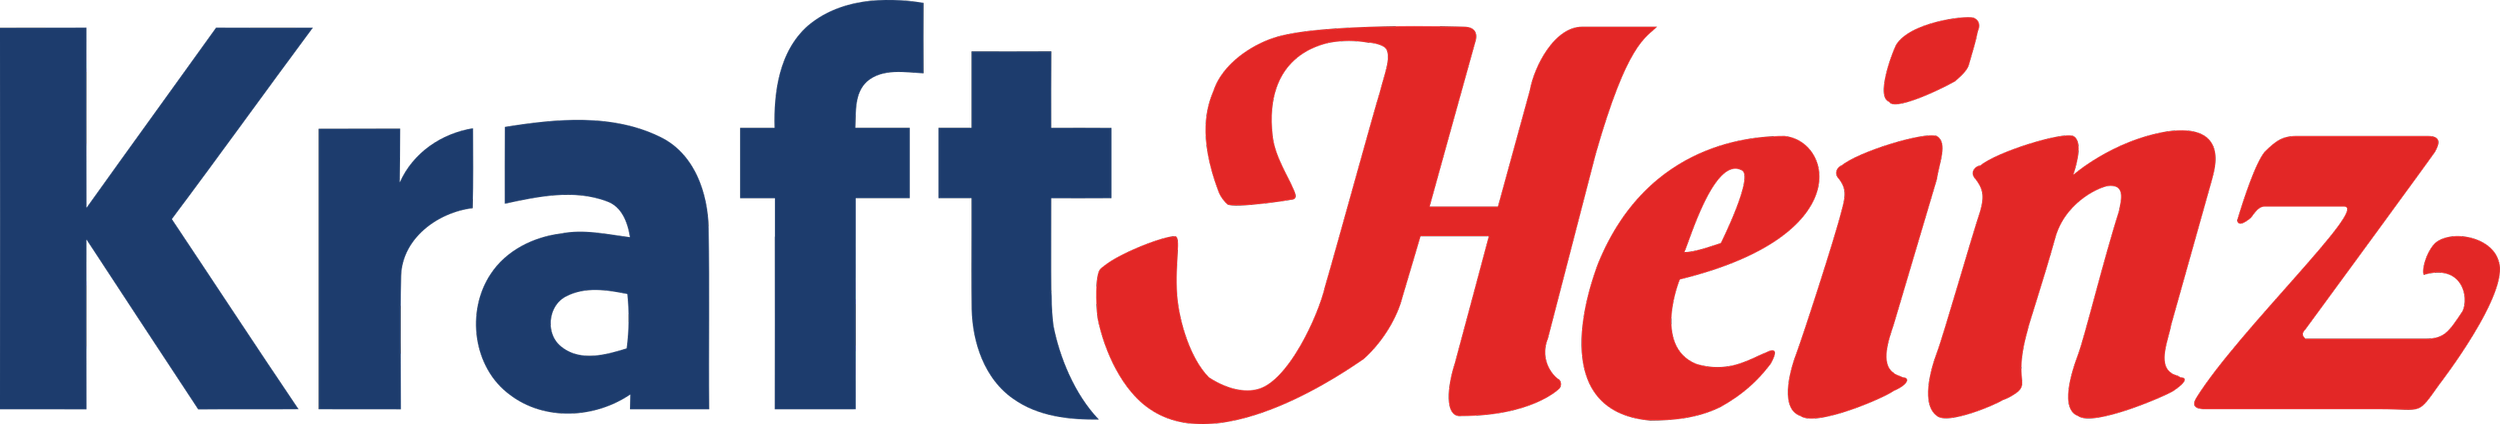 kraft-heinz-logo-2584742740.png